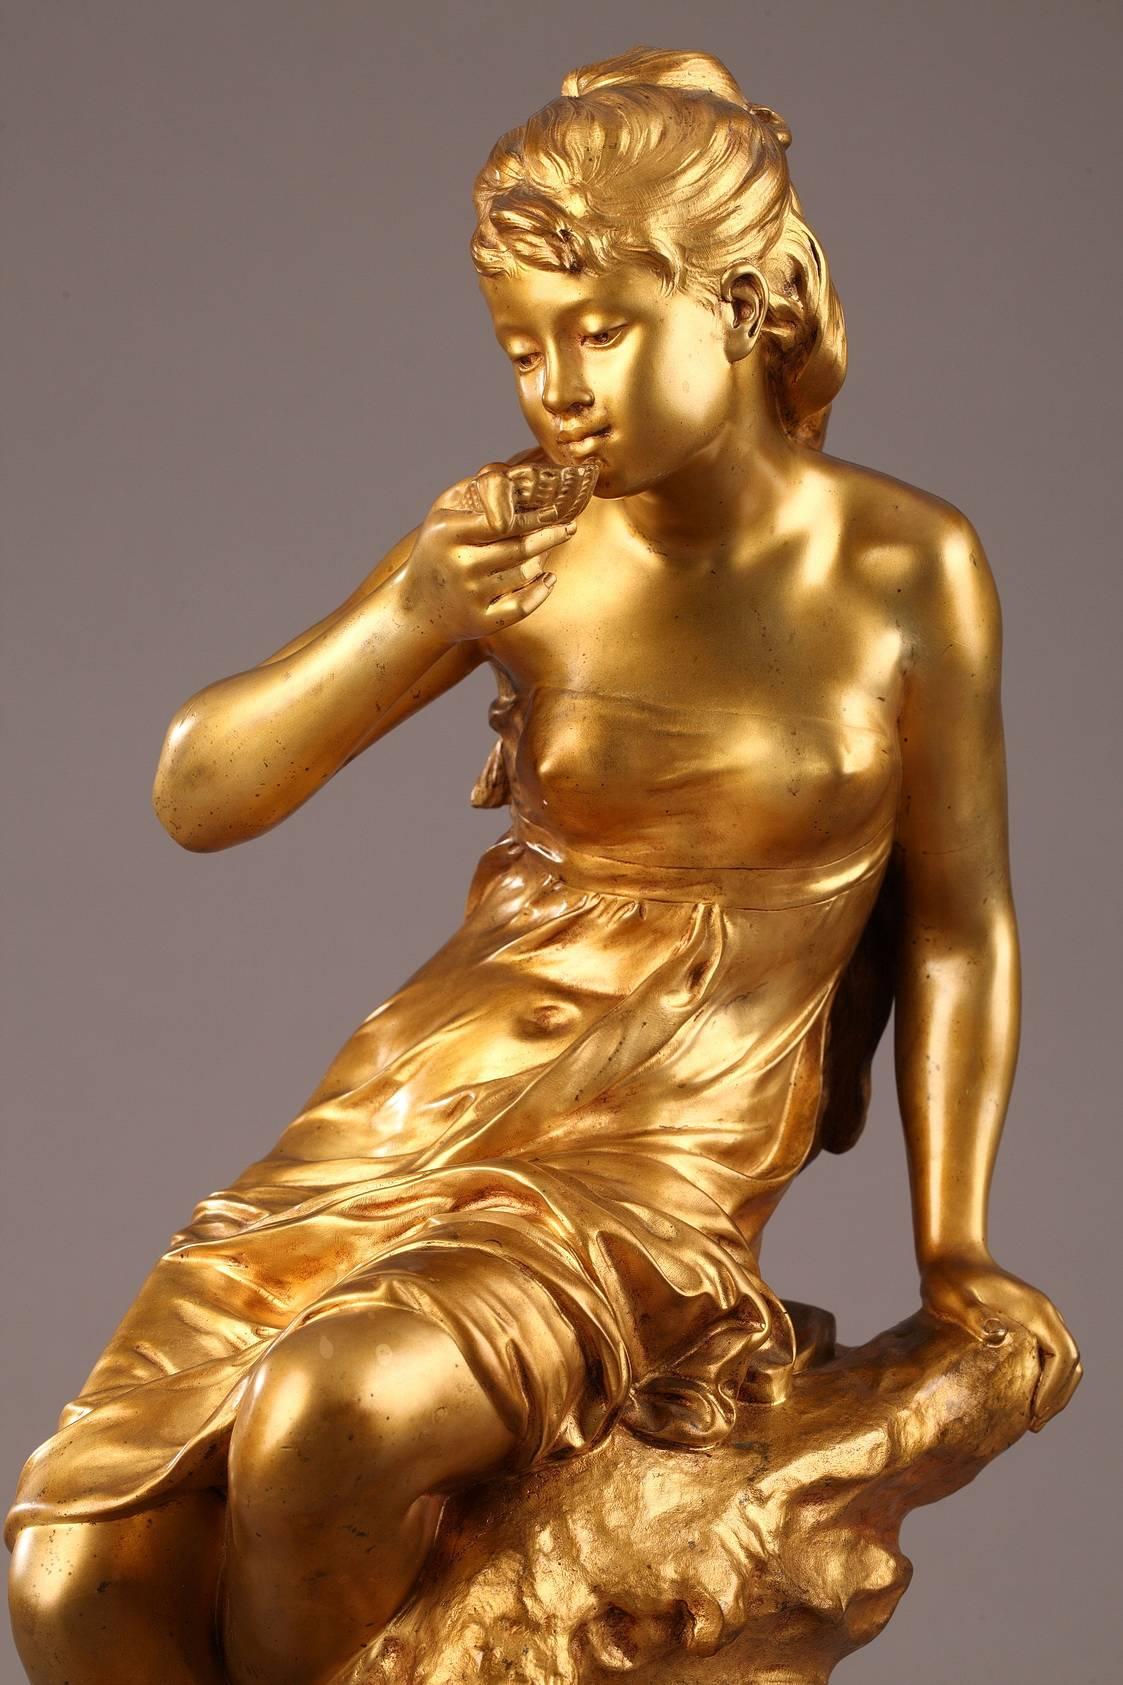 Late 19th Century Bronze Statue “La Source” by Mathurin Moreau